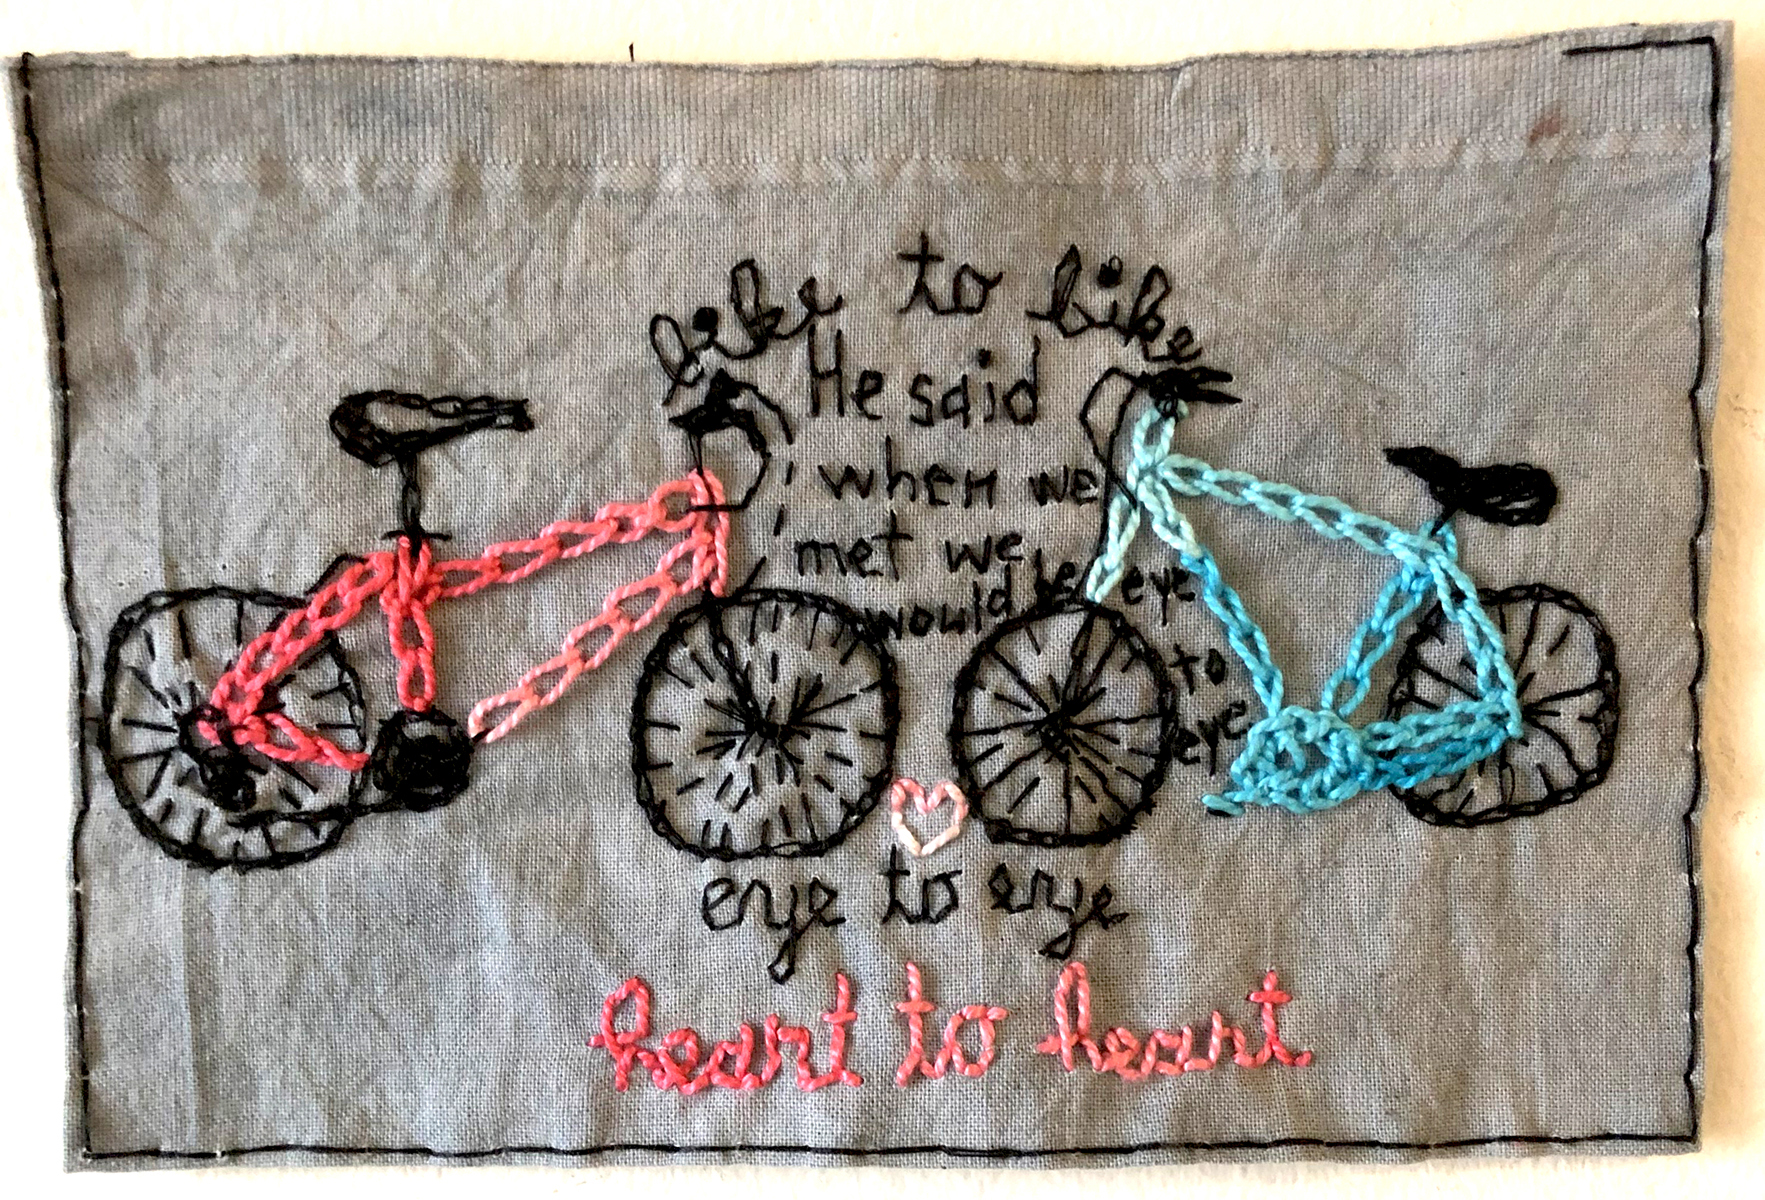 Iviva_Bike to bike_2019_embroidery on fabric